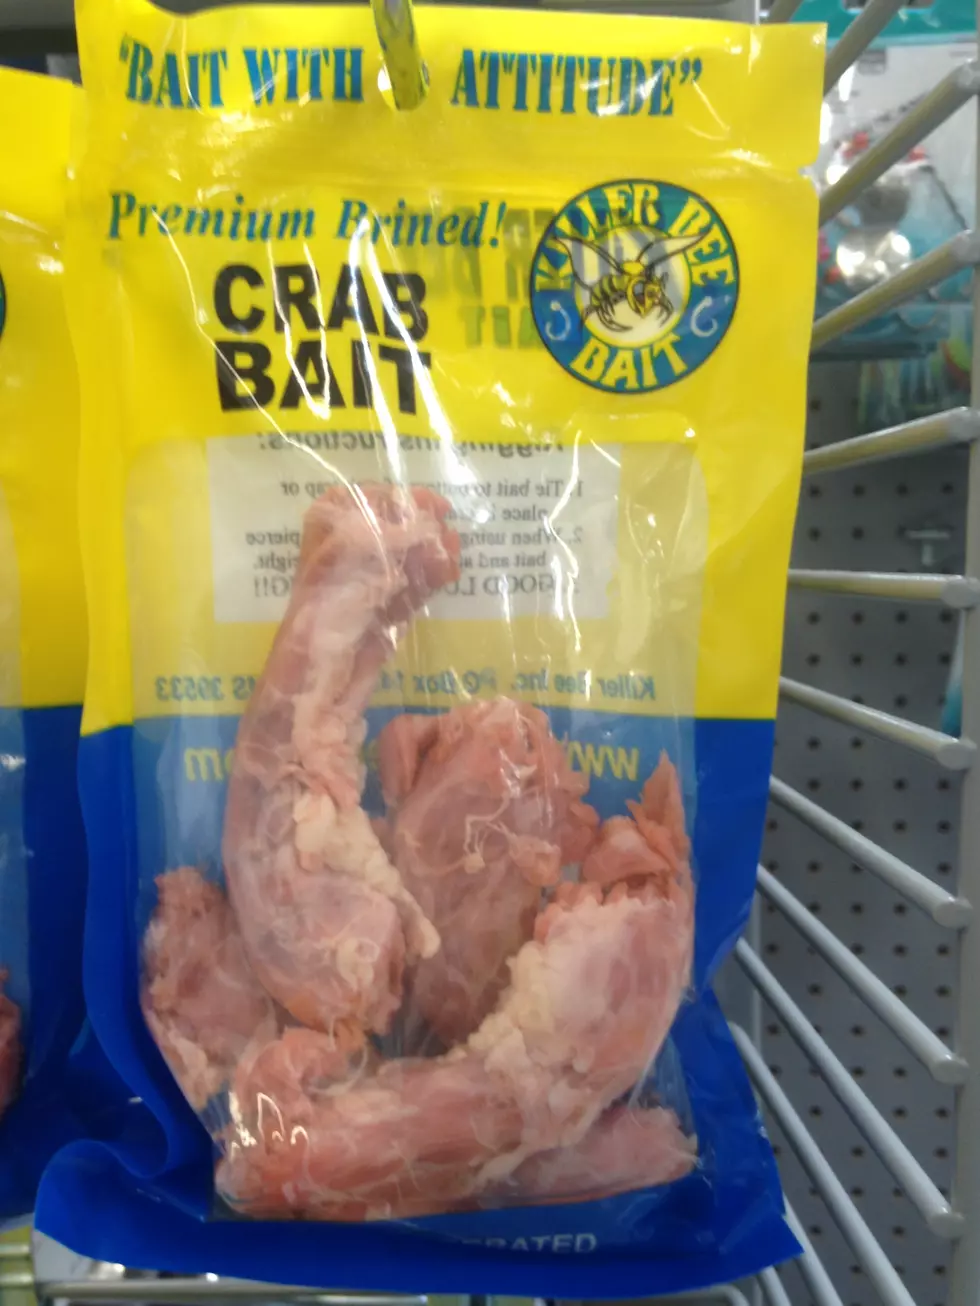 Only in Walmart &#8211; Raw Crab Bait?